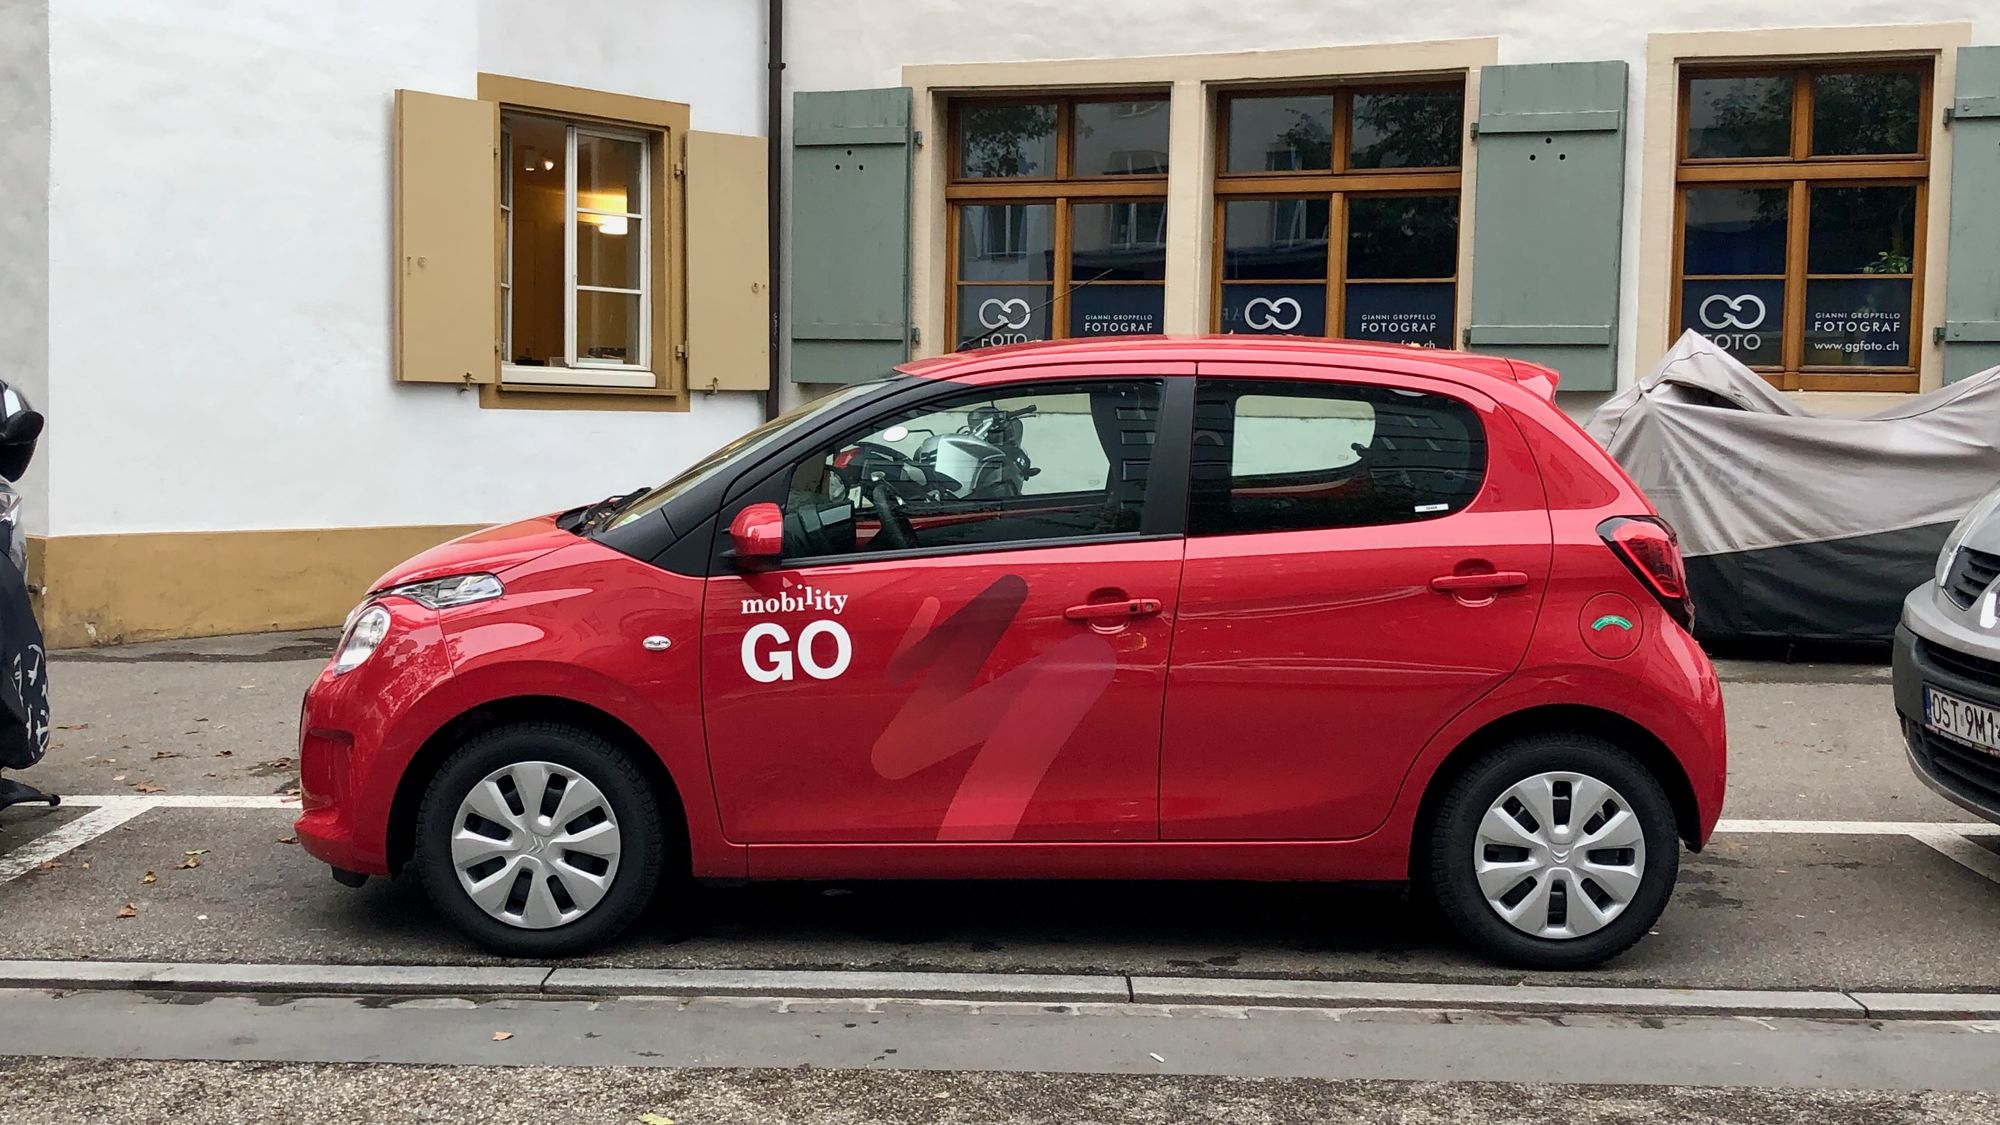 Mobility Go Fahrzeug auf einem Parkplatz in Basel